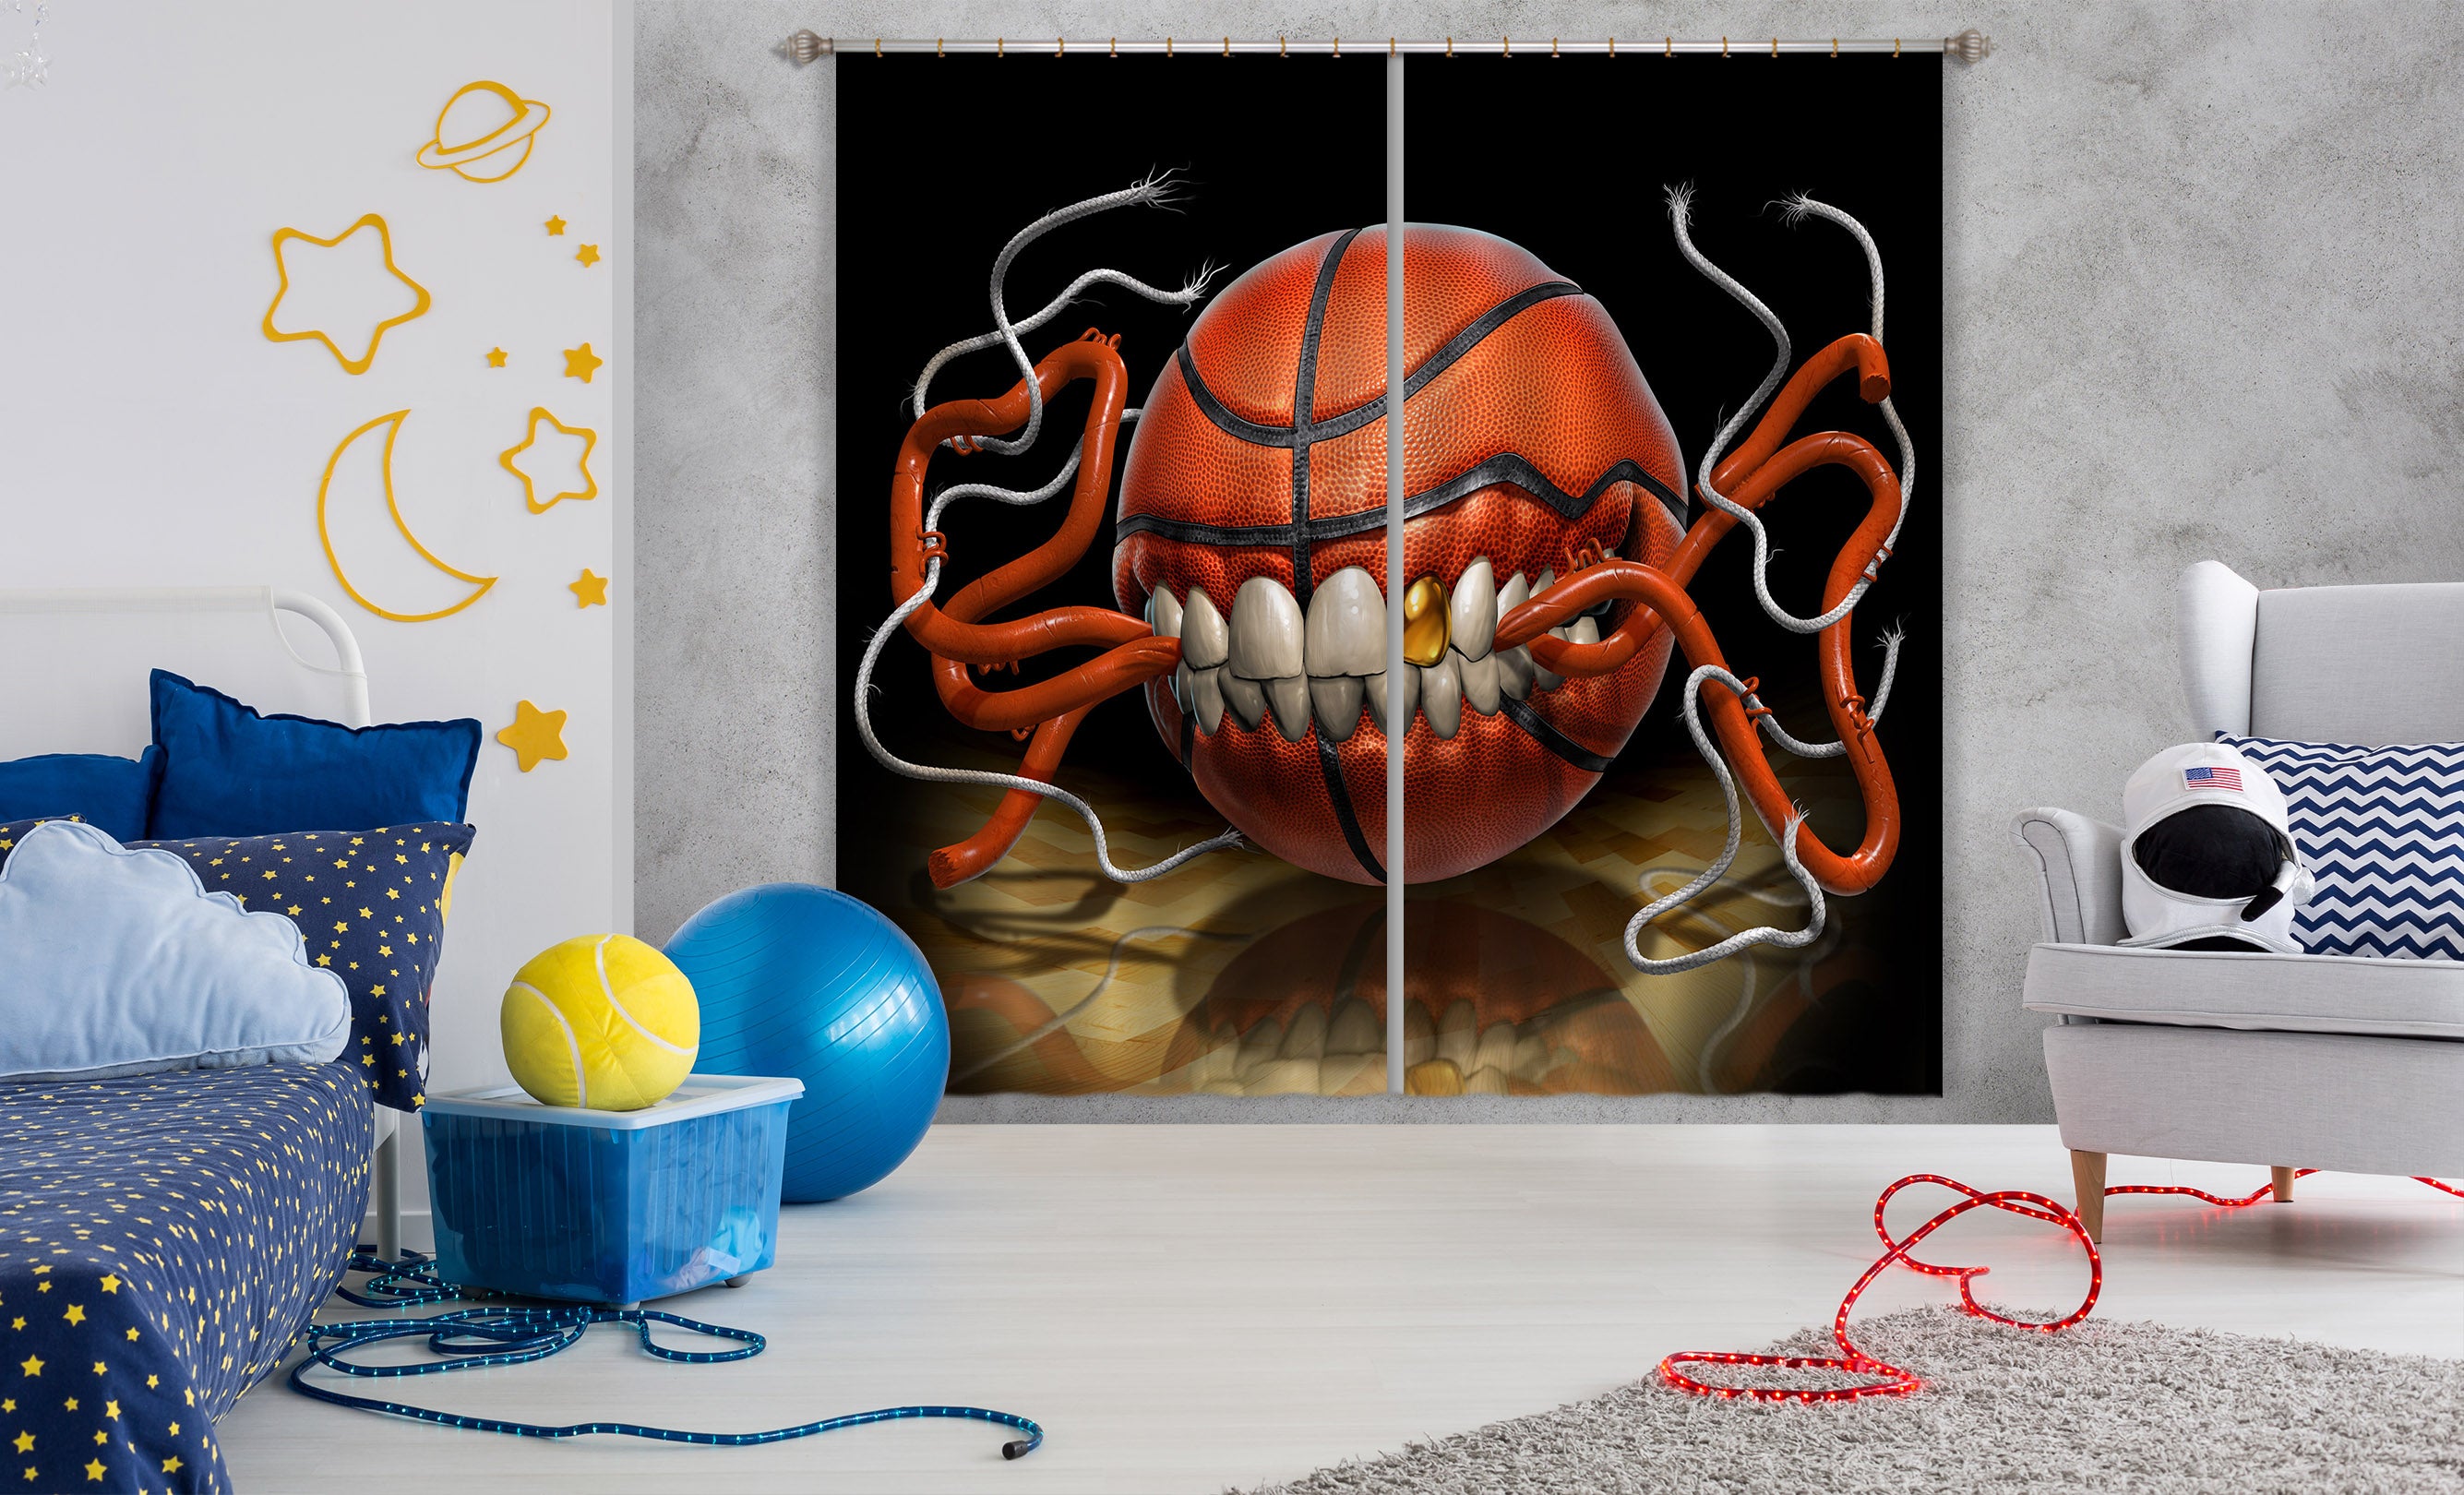 3D Teeth Basketball 5046 Tom Wood Curtain Curtains Drapes